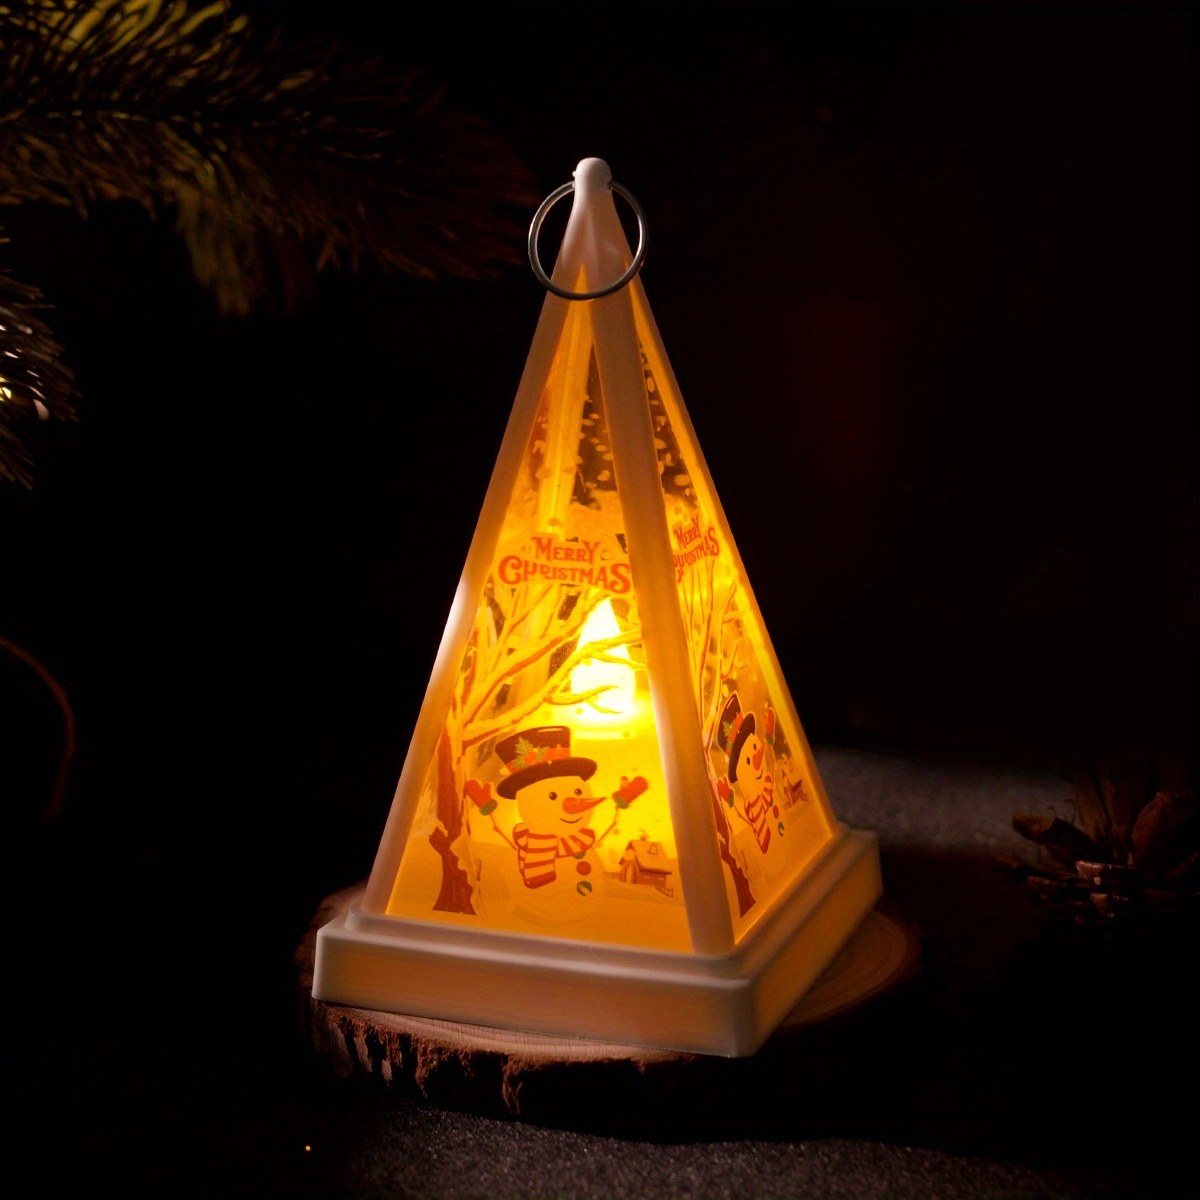 Led Pyramid Small Lantern, Hanging Night Light, Decorative